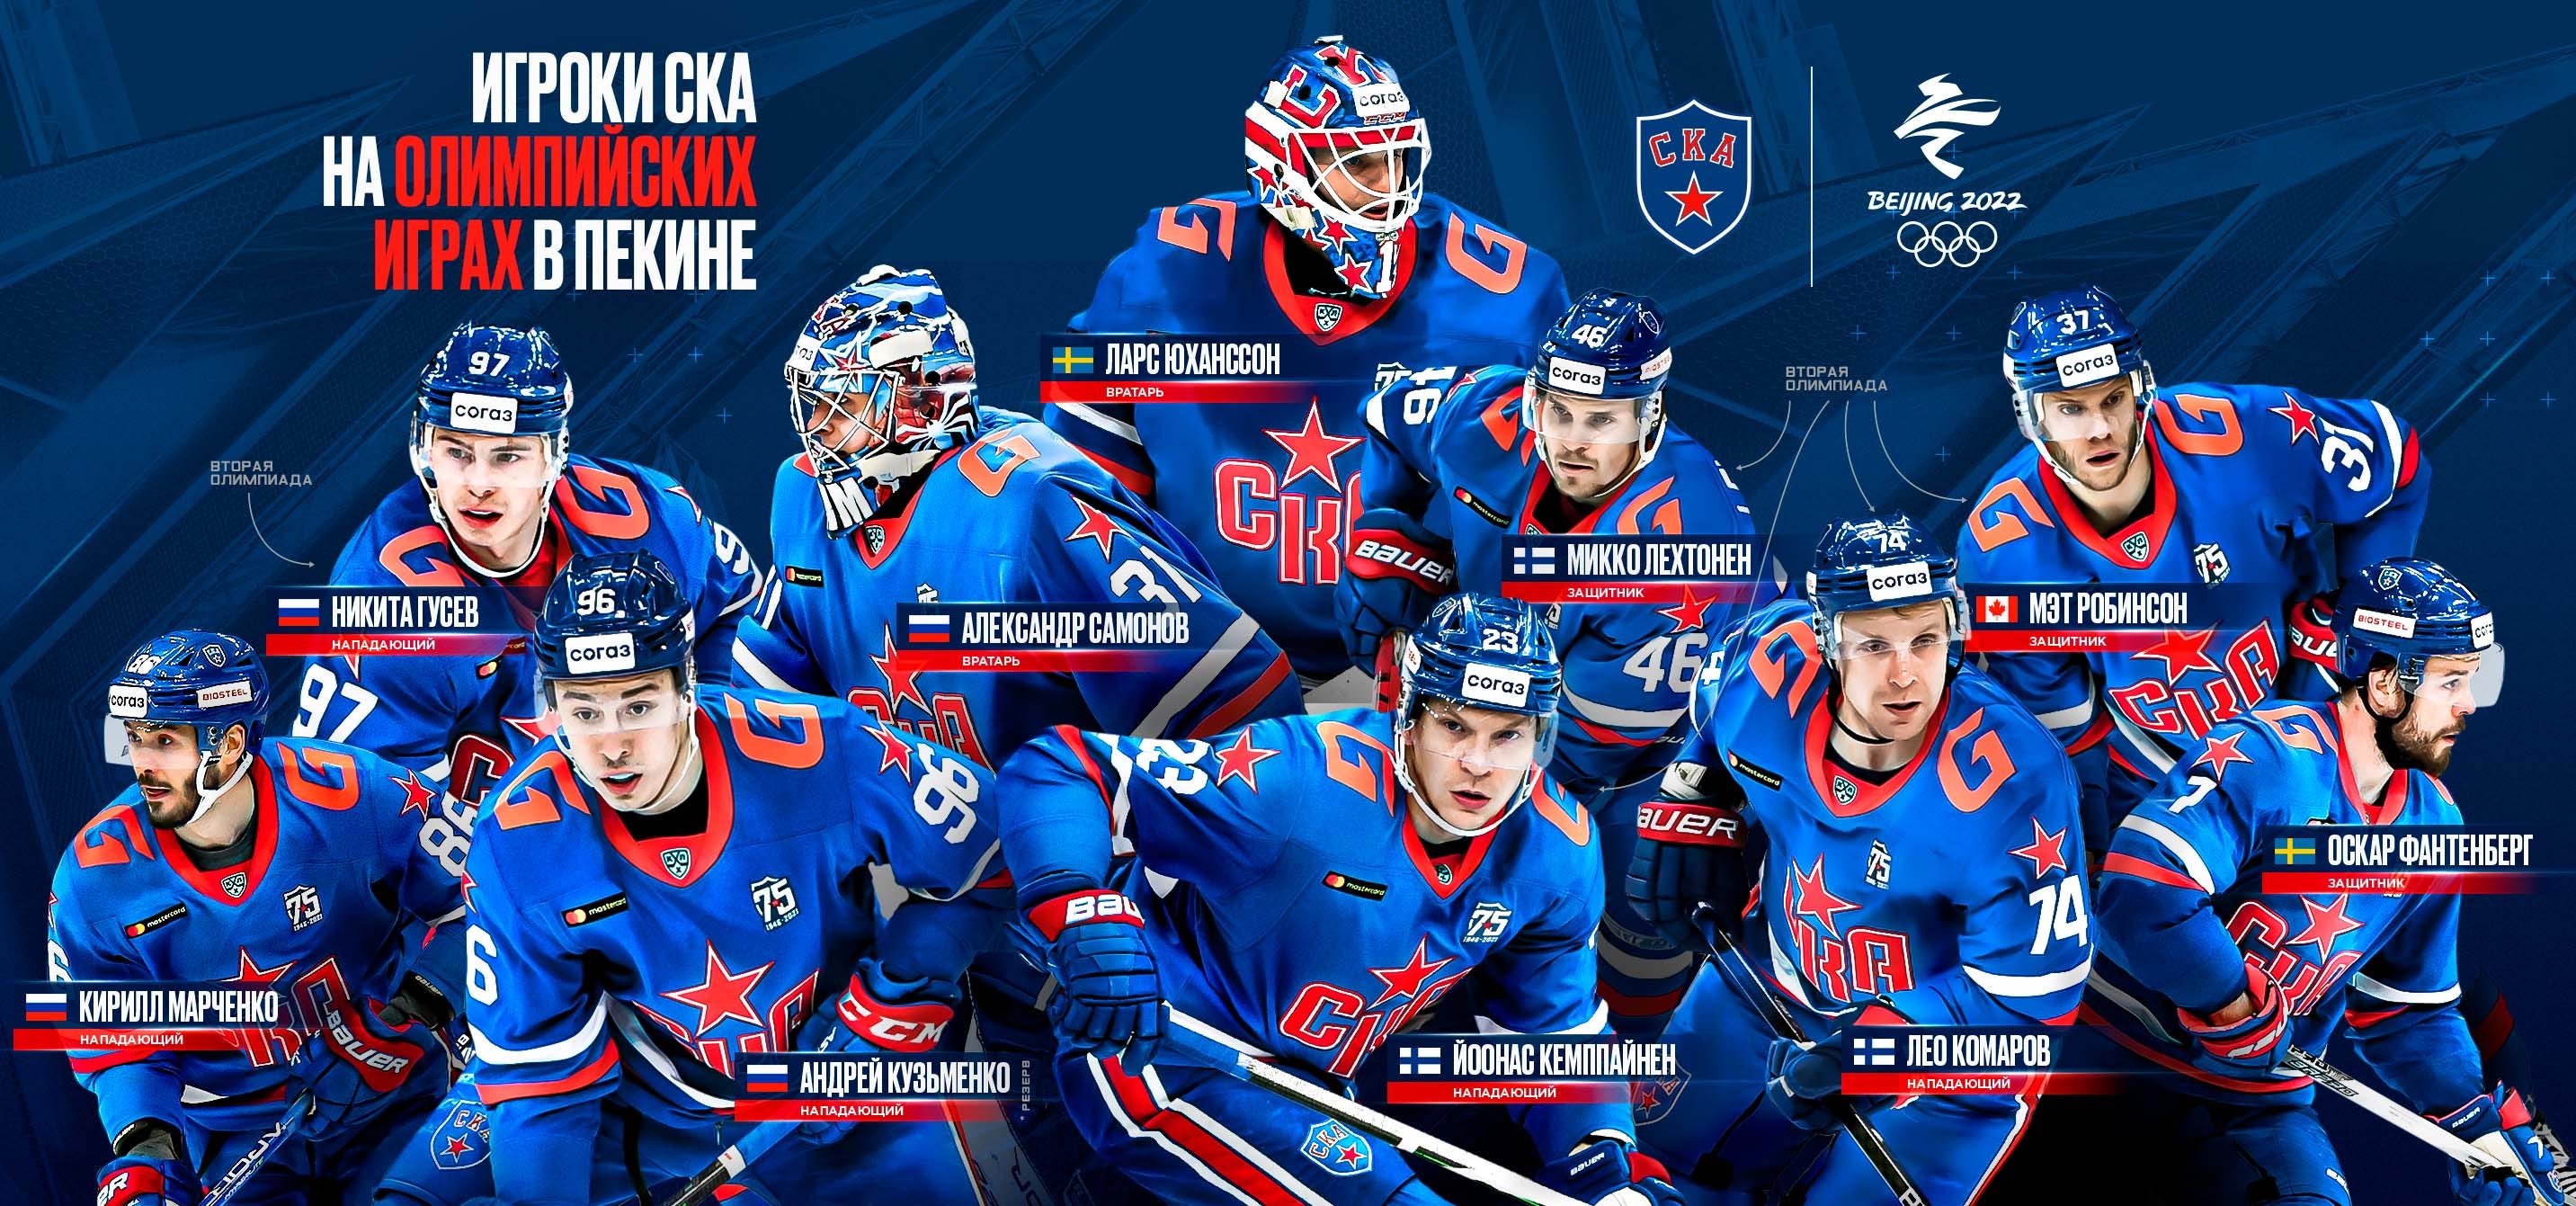 KHL on X: Big night for Kirill Marchenko, who had career-high 3